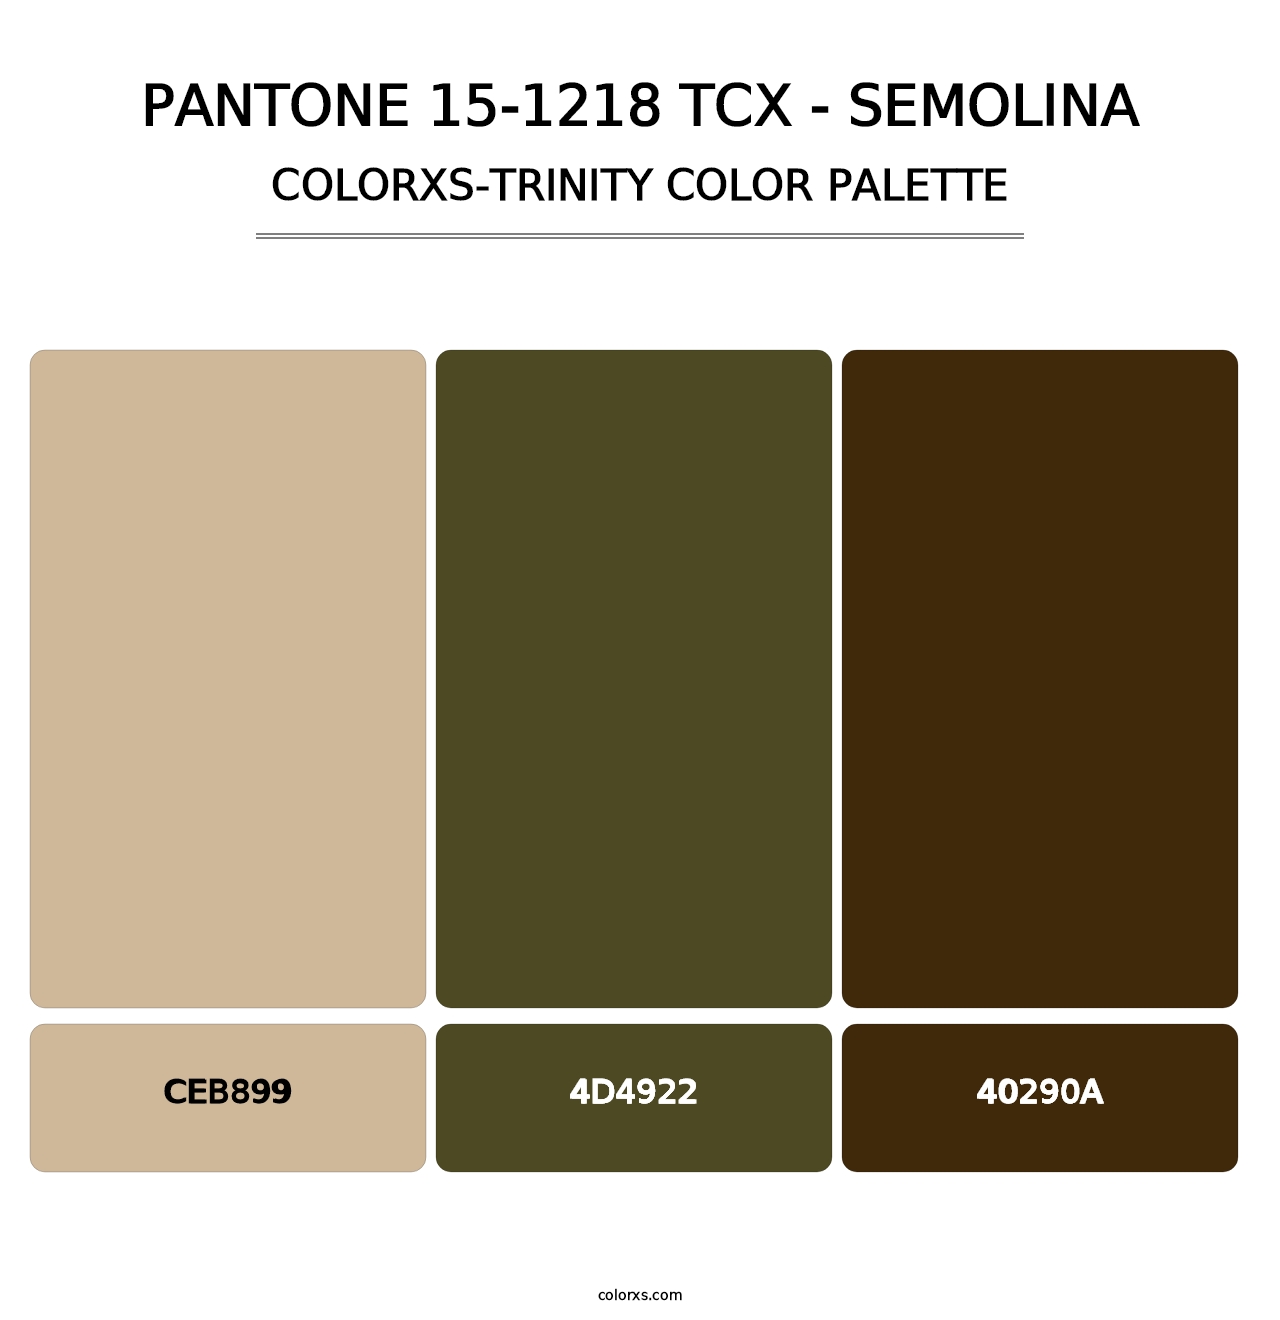 PANTONE 15-1218 TCX - Semolina - Colorxs Trinity Palette